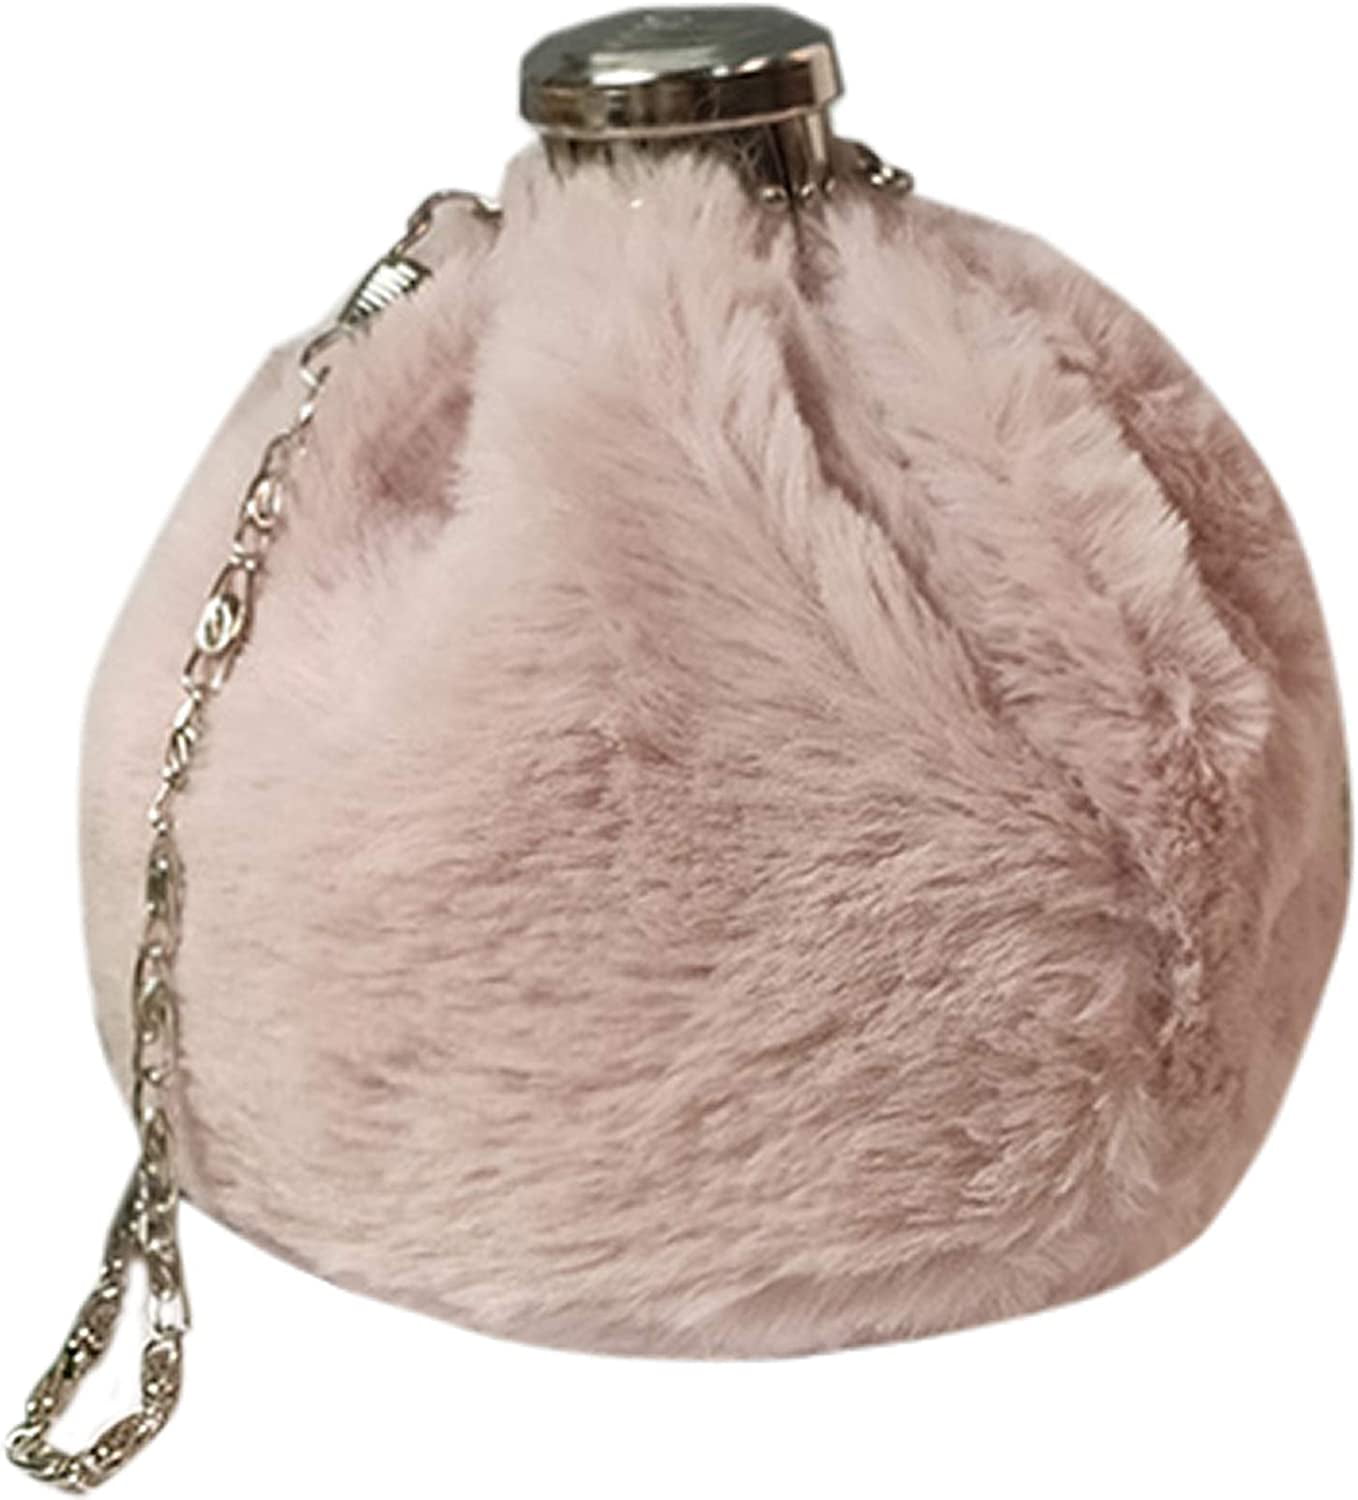 Guess Women's Tesoro Clutch Handbag Faux Fur Crossbody Bag Black | eBay